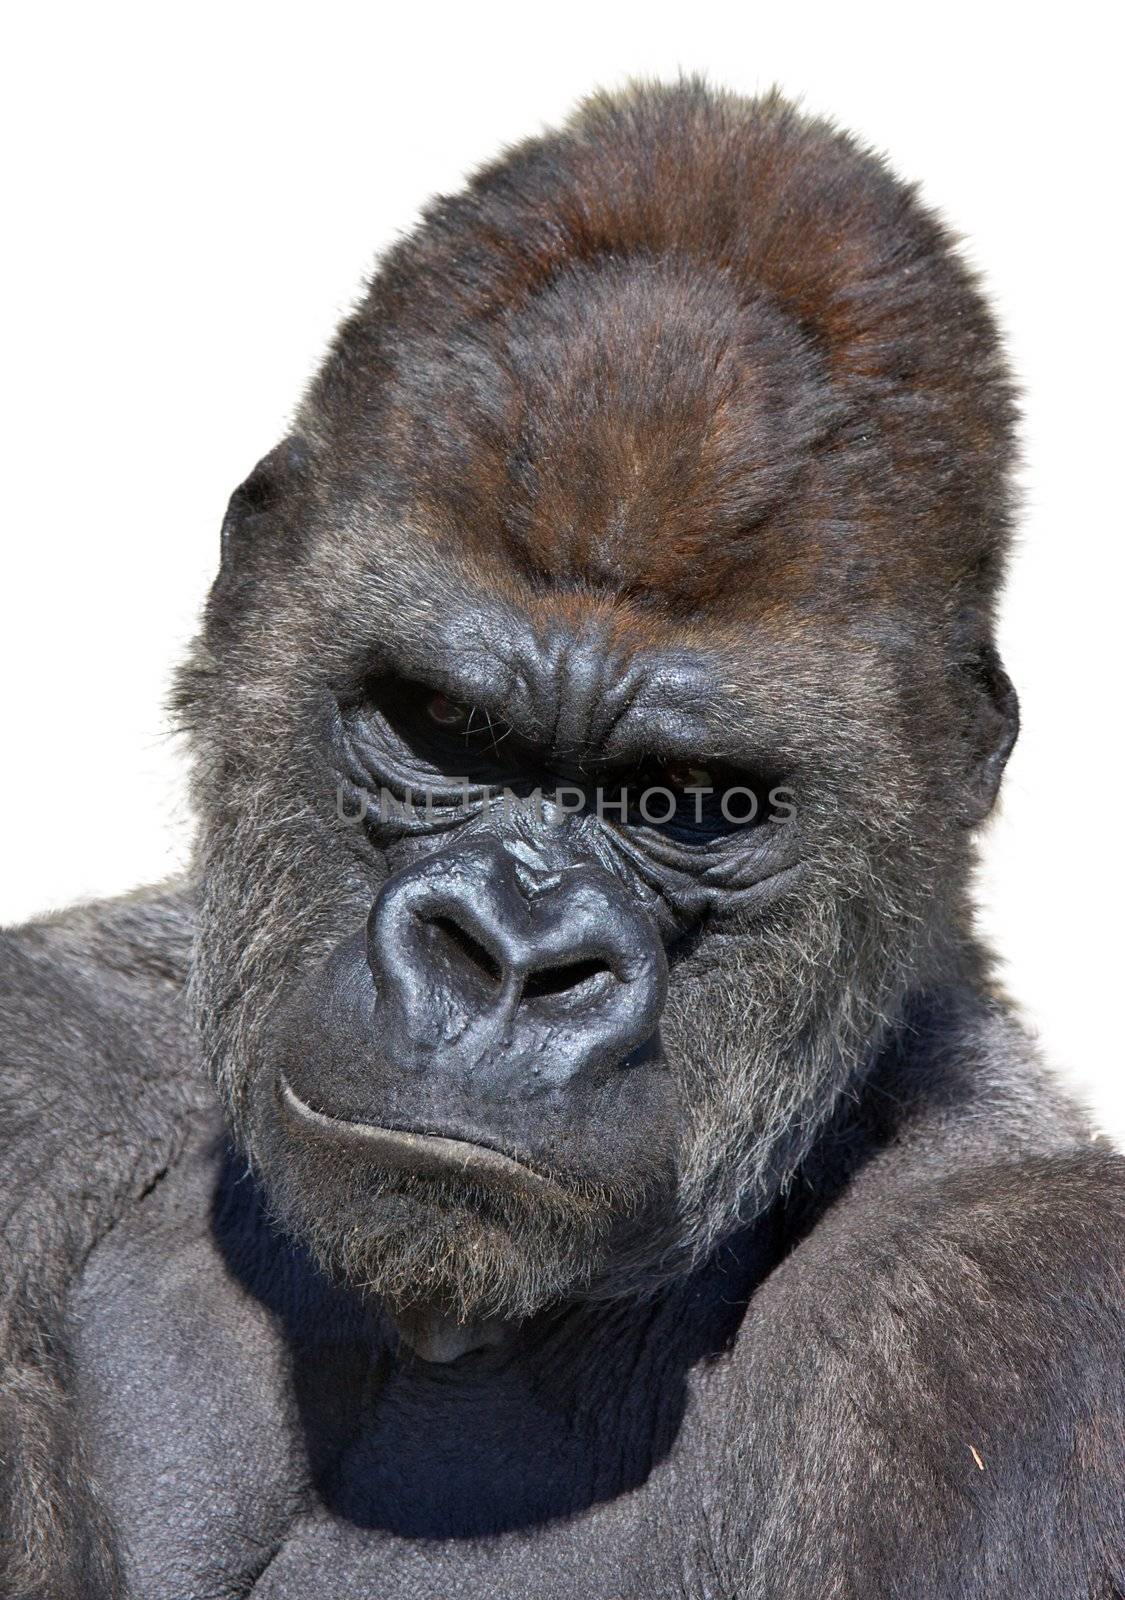 Gorilla portrait by benjaminet